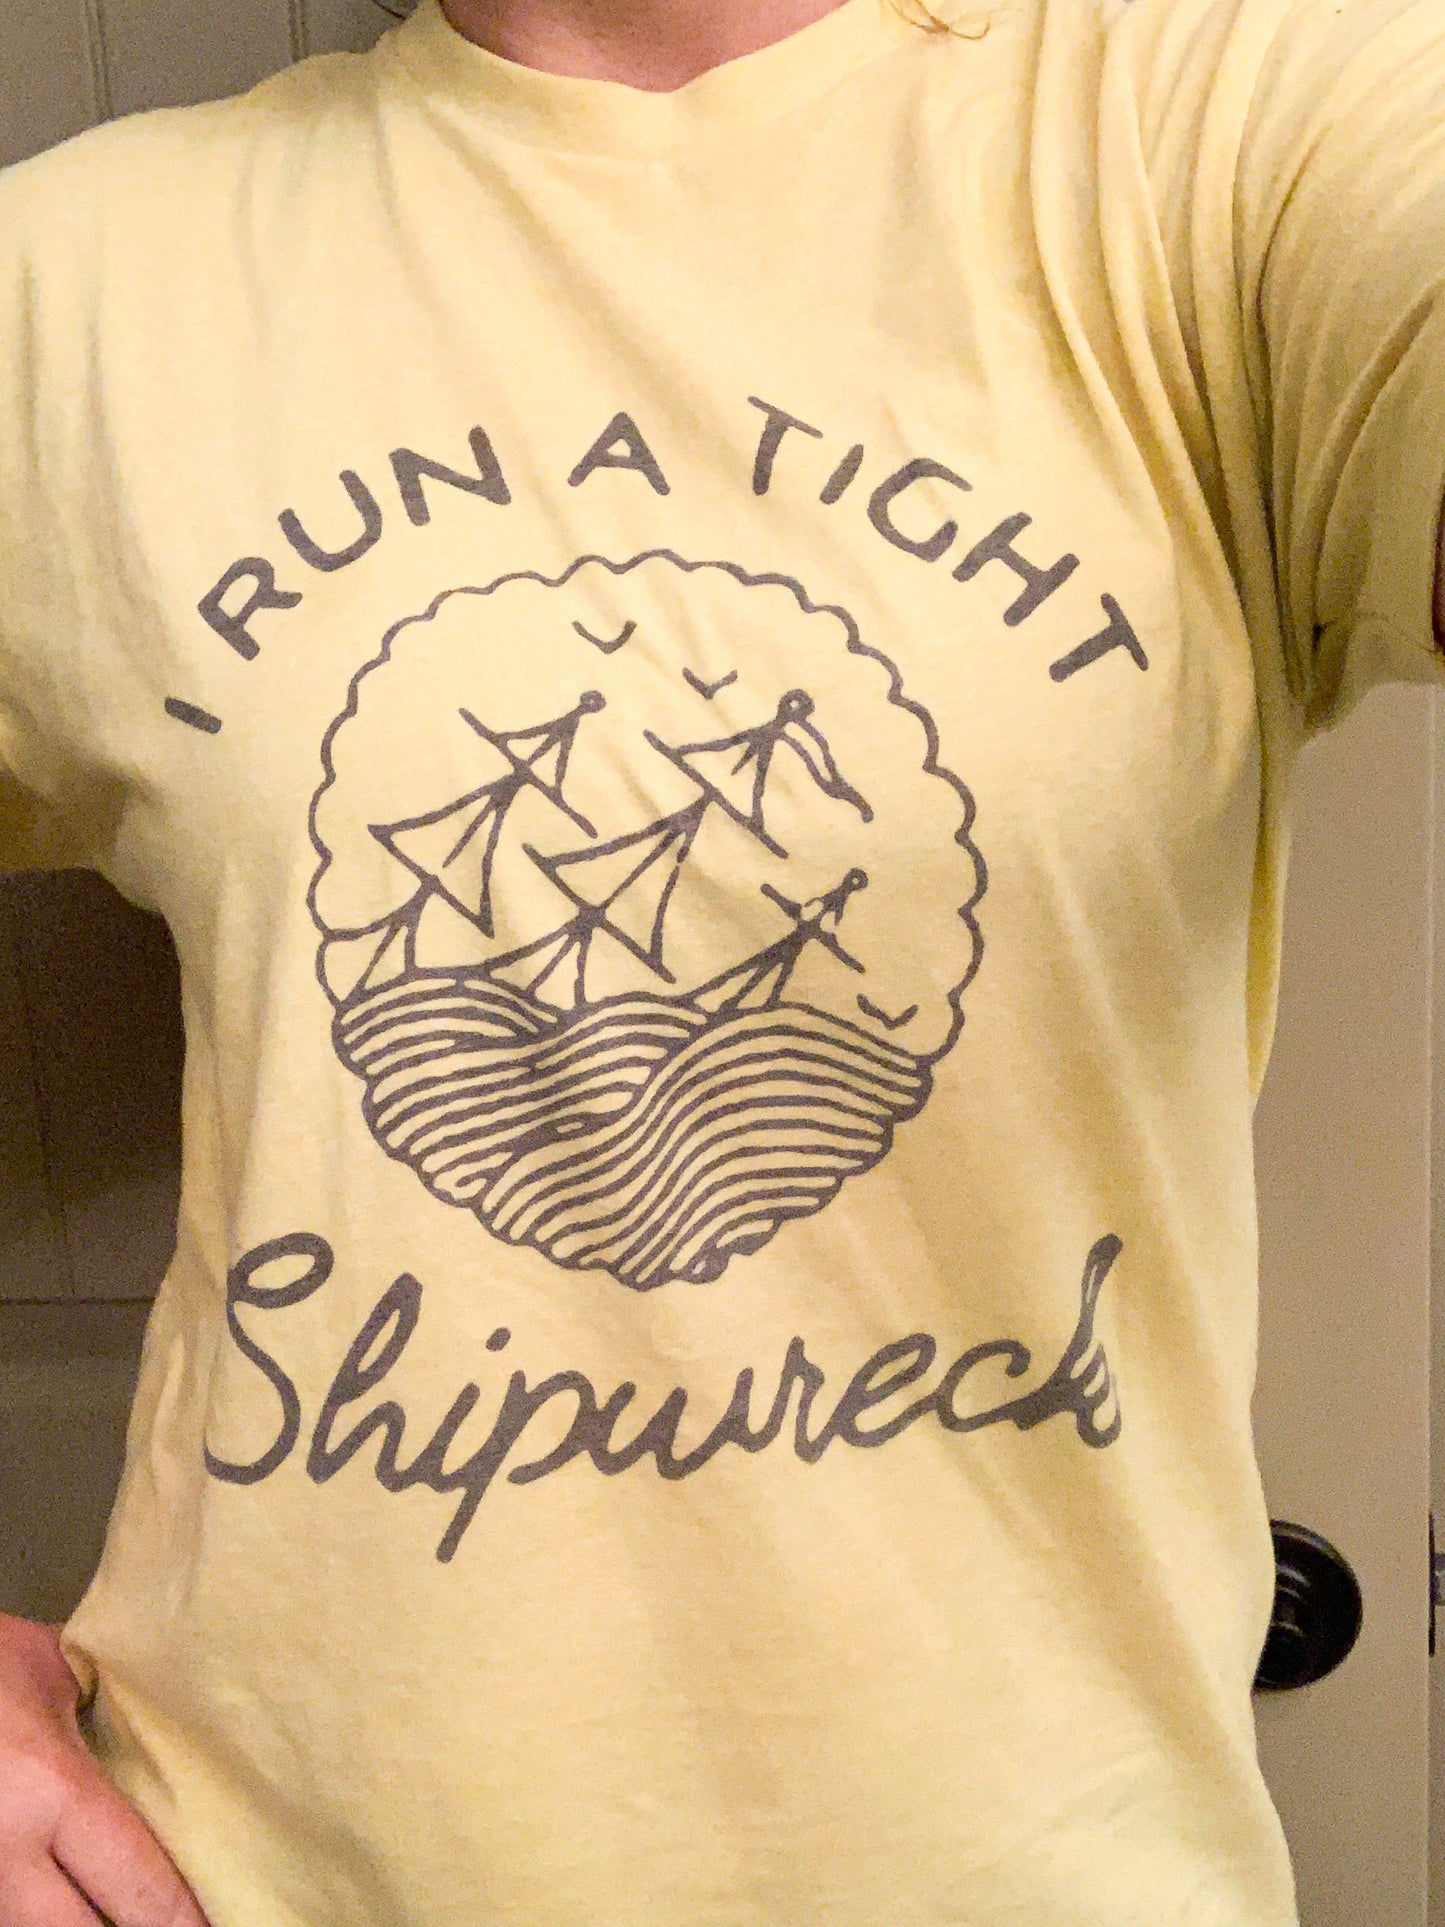 I Run A Tight Shipwreck || Soft Permanent Print T-Shirt